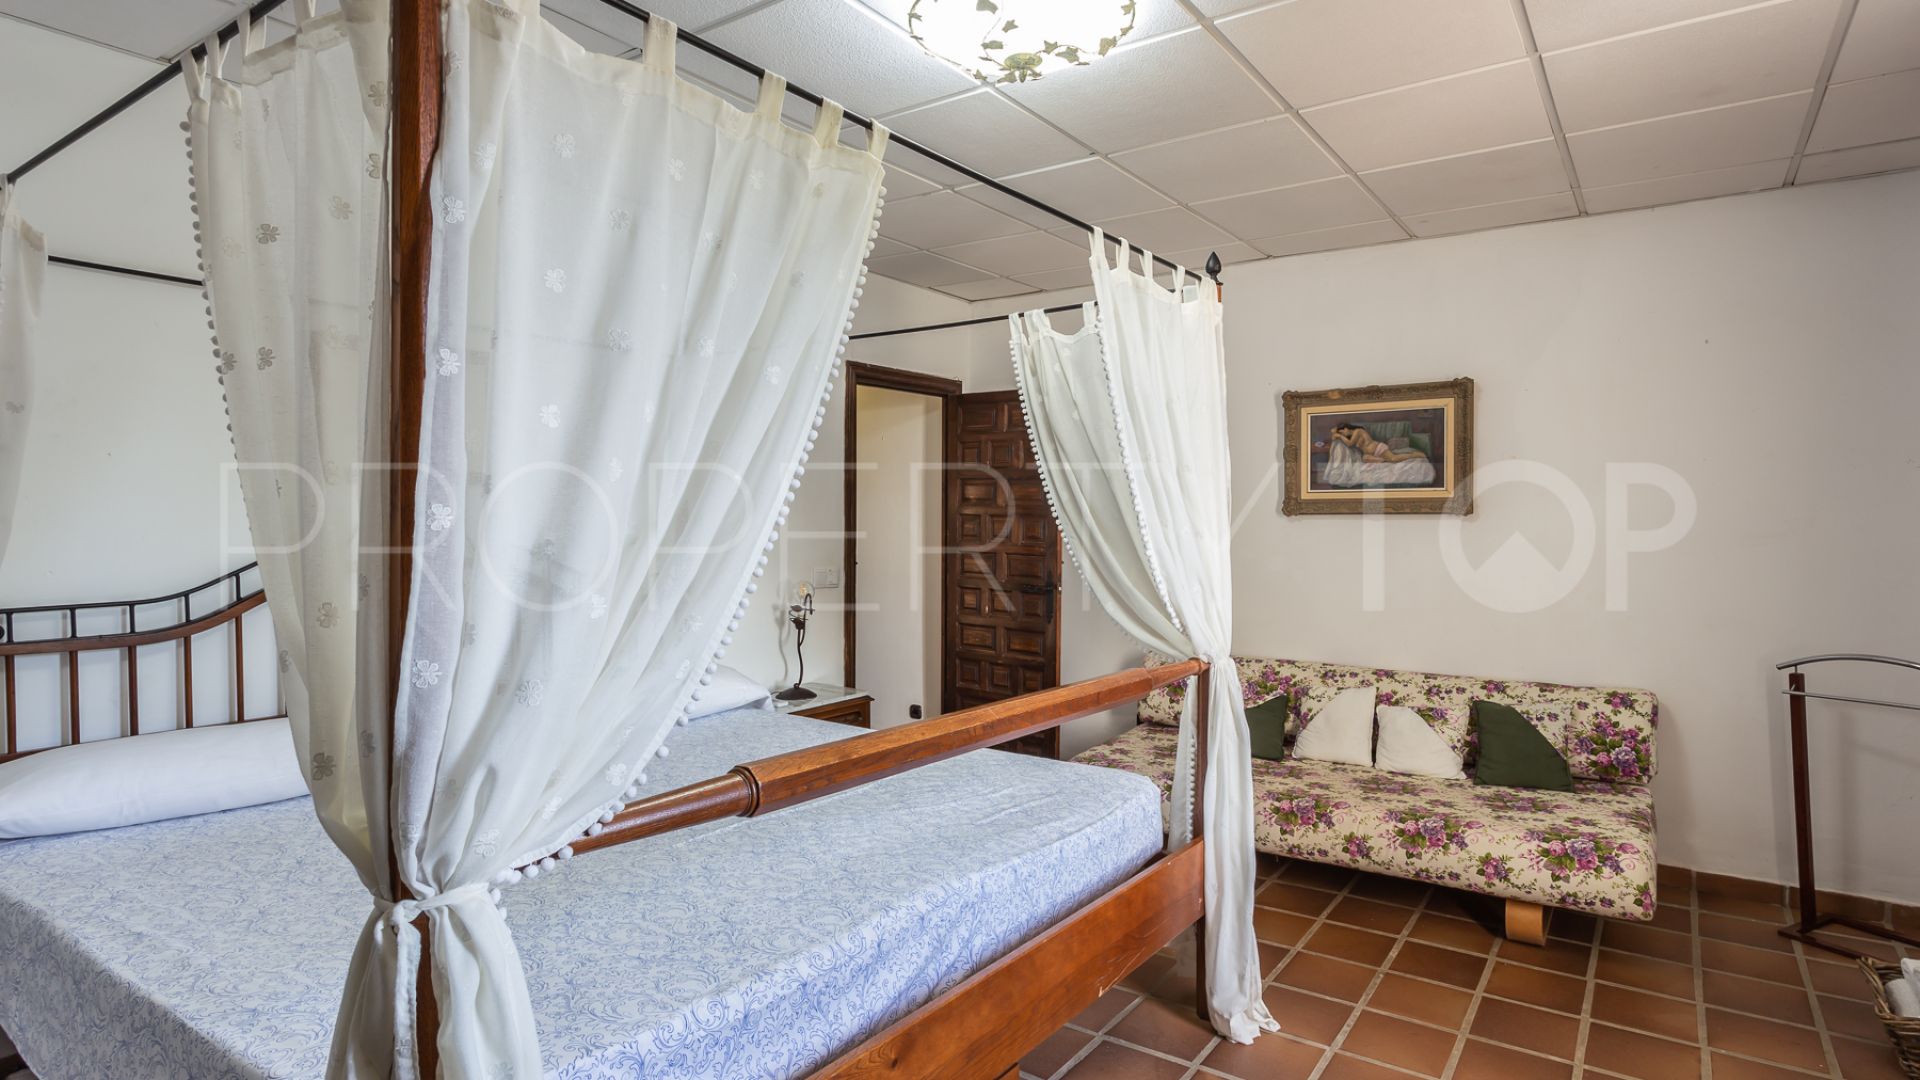 Estate for sale in Alcala de Guadaira with 13 bedrooms